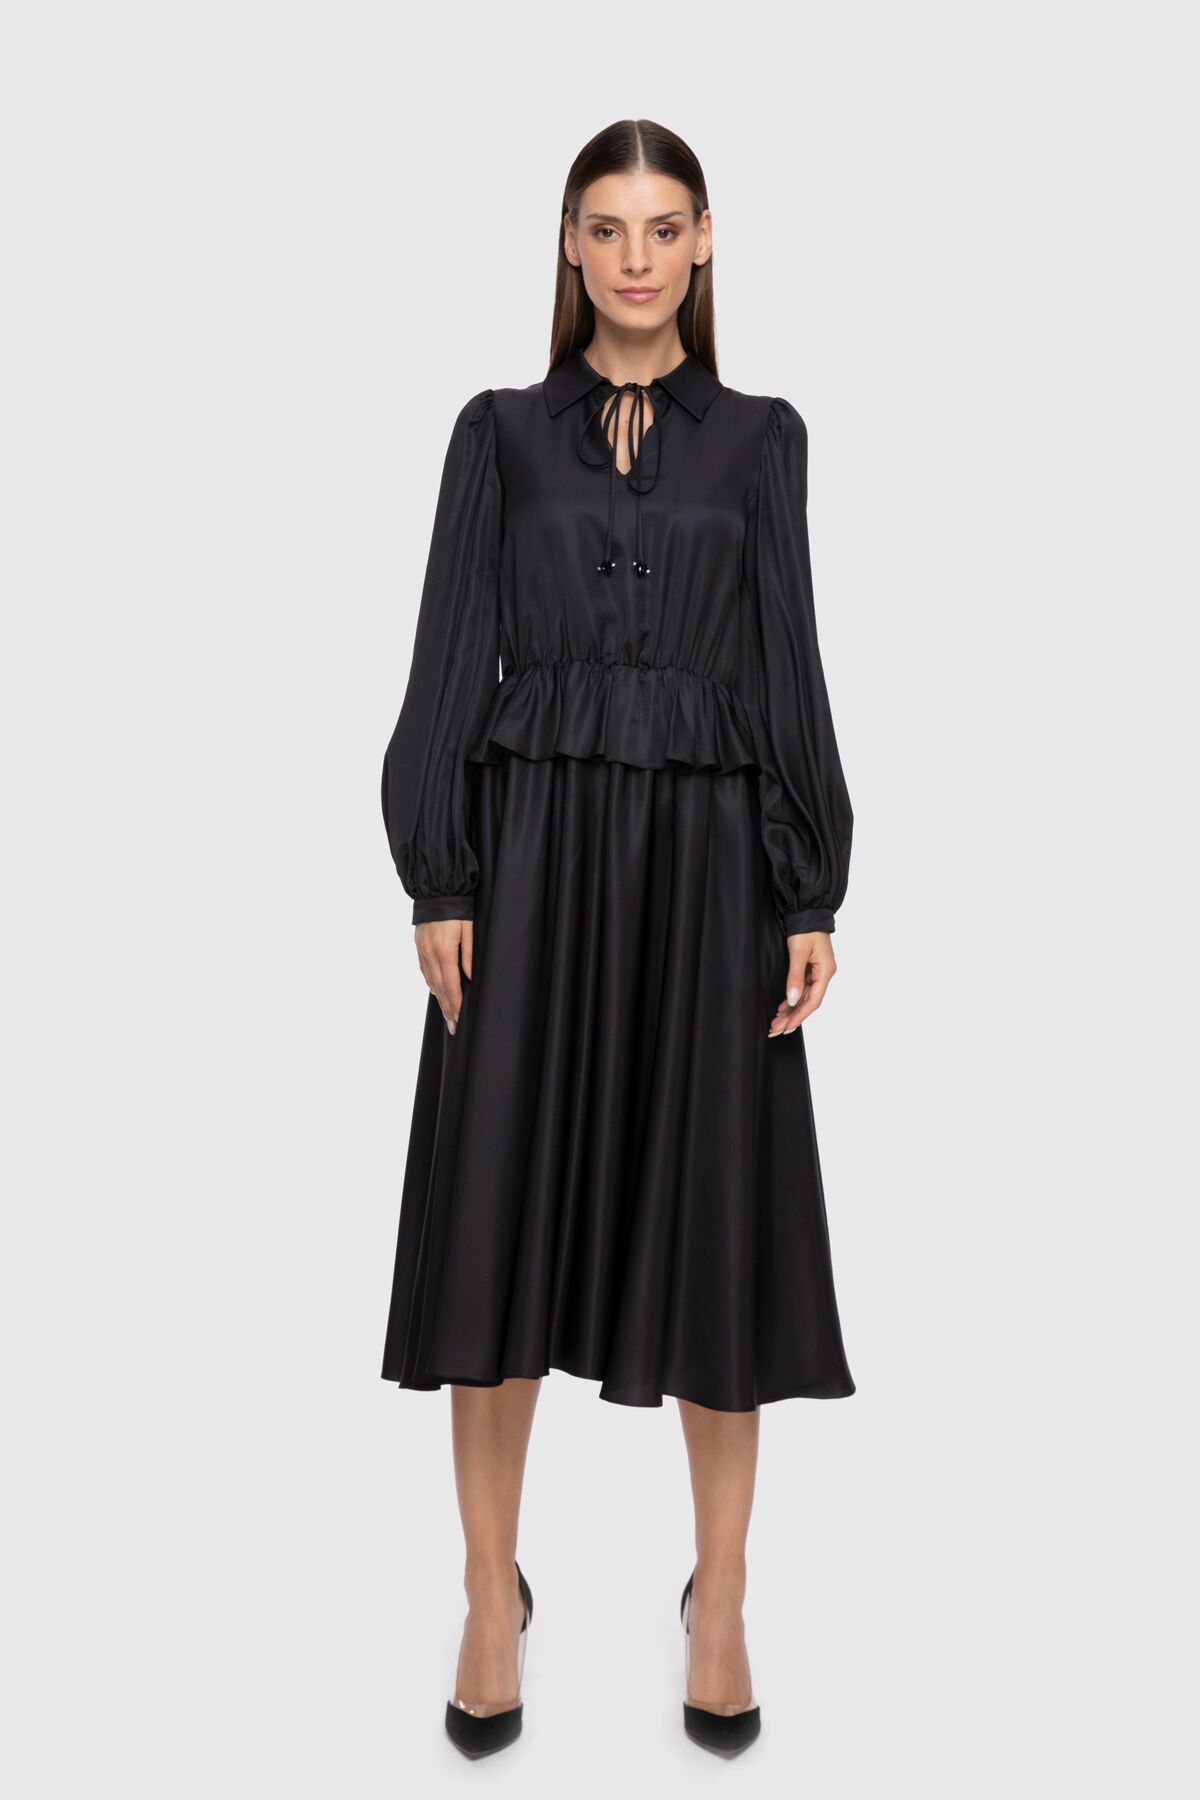  GIZIA - Tie Neck Detailed Skirt Pleated Black Midi Dress